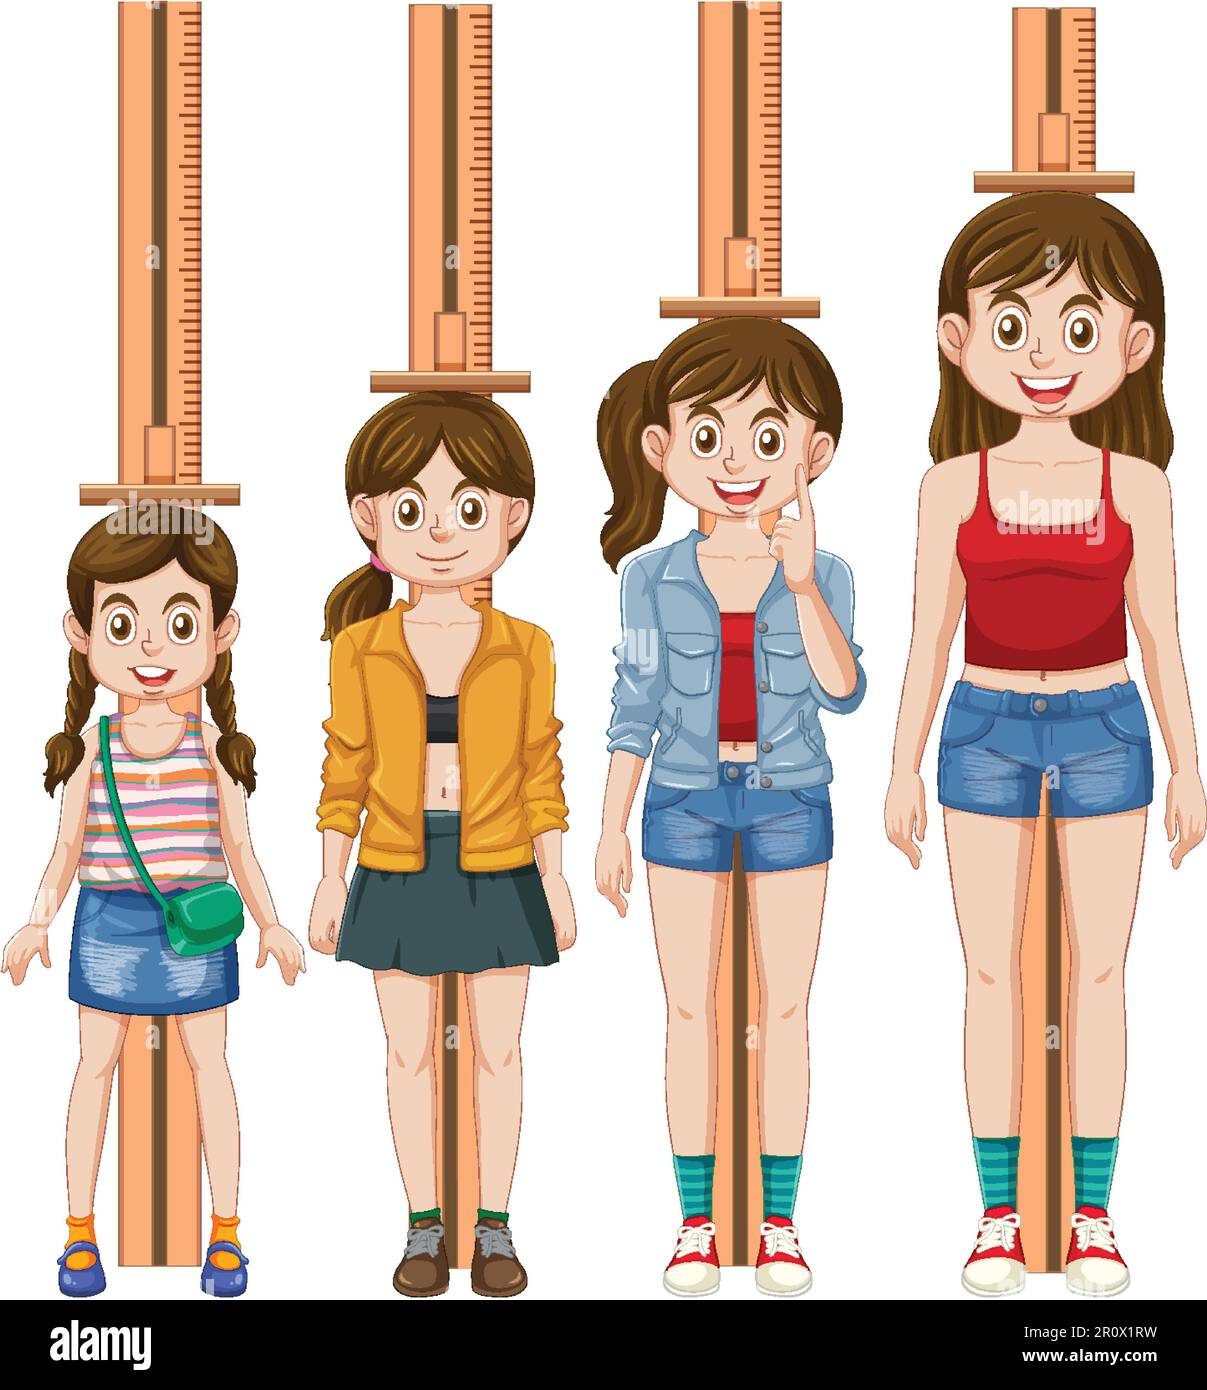 https://c8.alamy.com/comp/2R0X1RW/puberty-girl-measuring-height-illustration-2R0X1RW.jpg